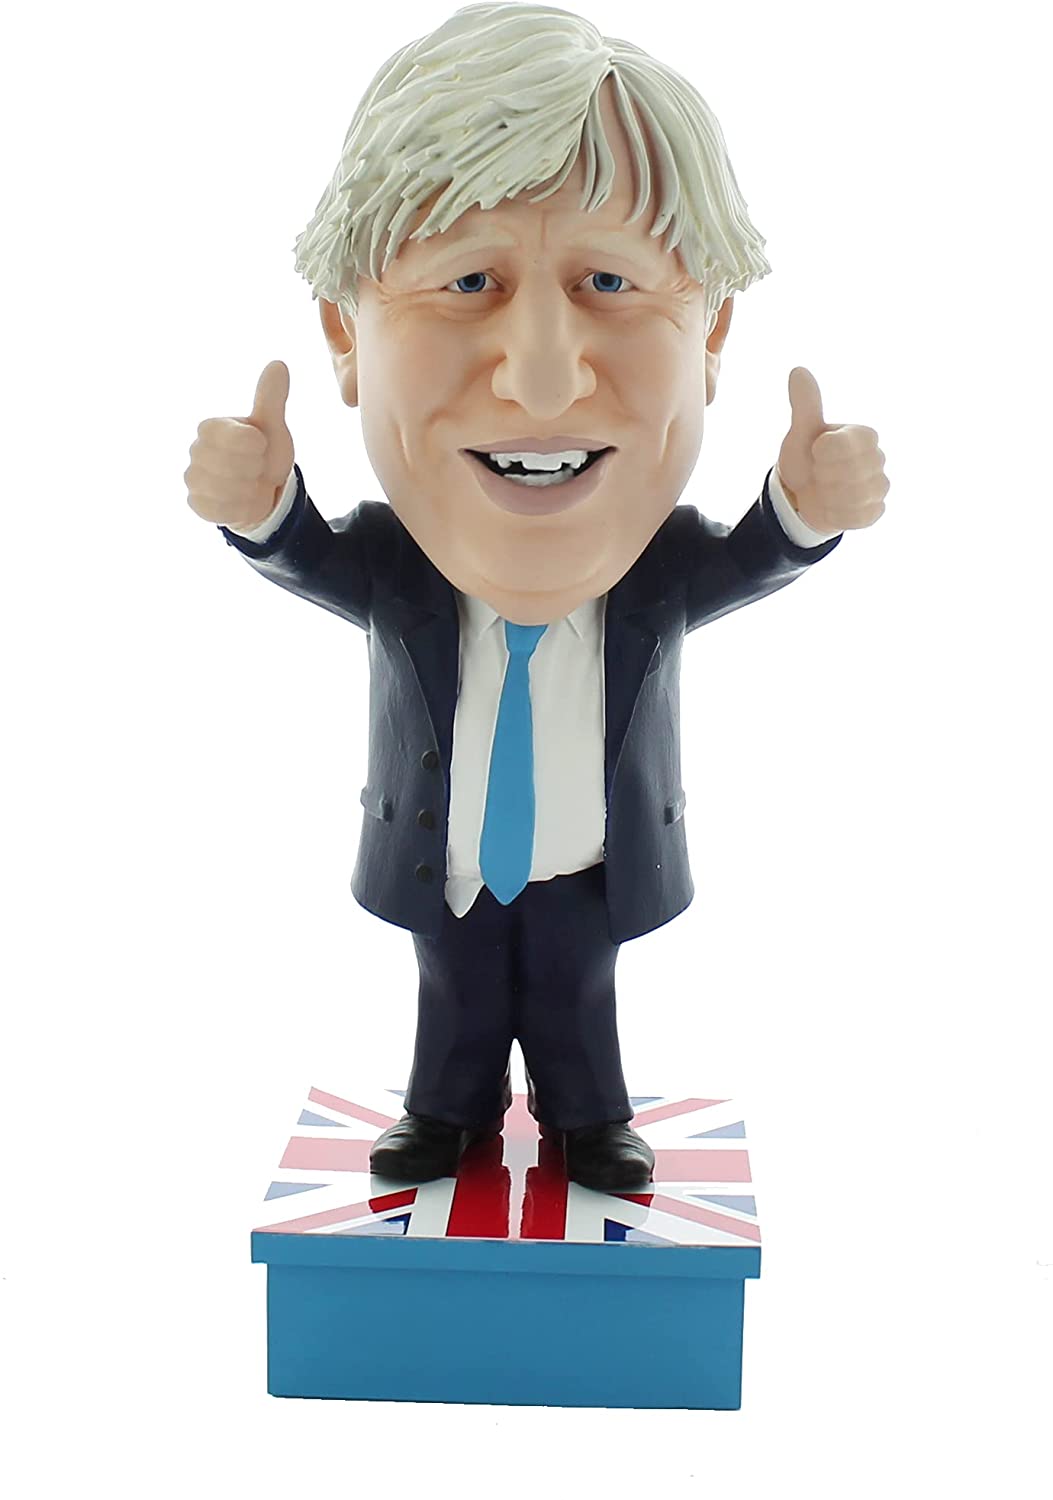 Mimiconz Figurines: World Leaders (Boris Johnson), MIMIBOR